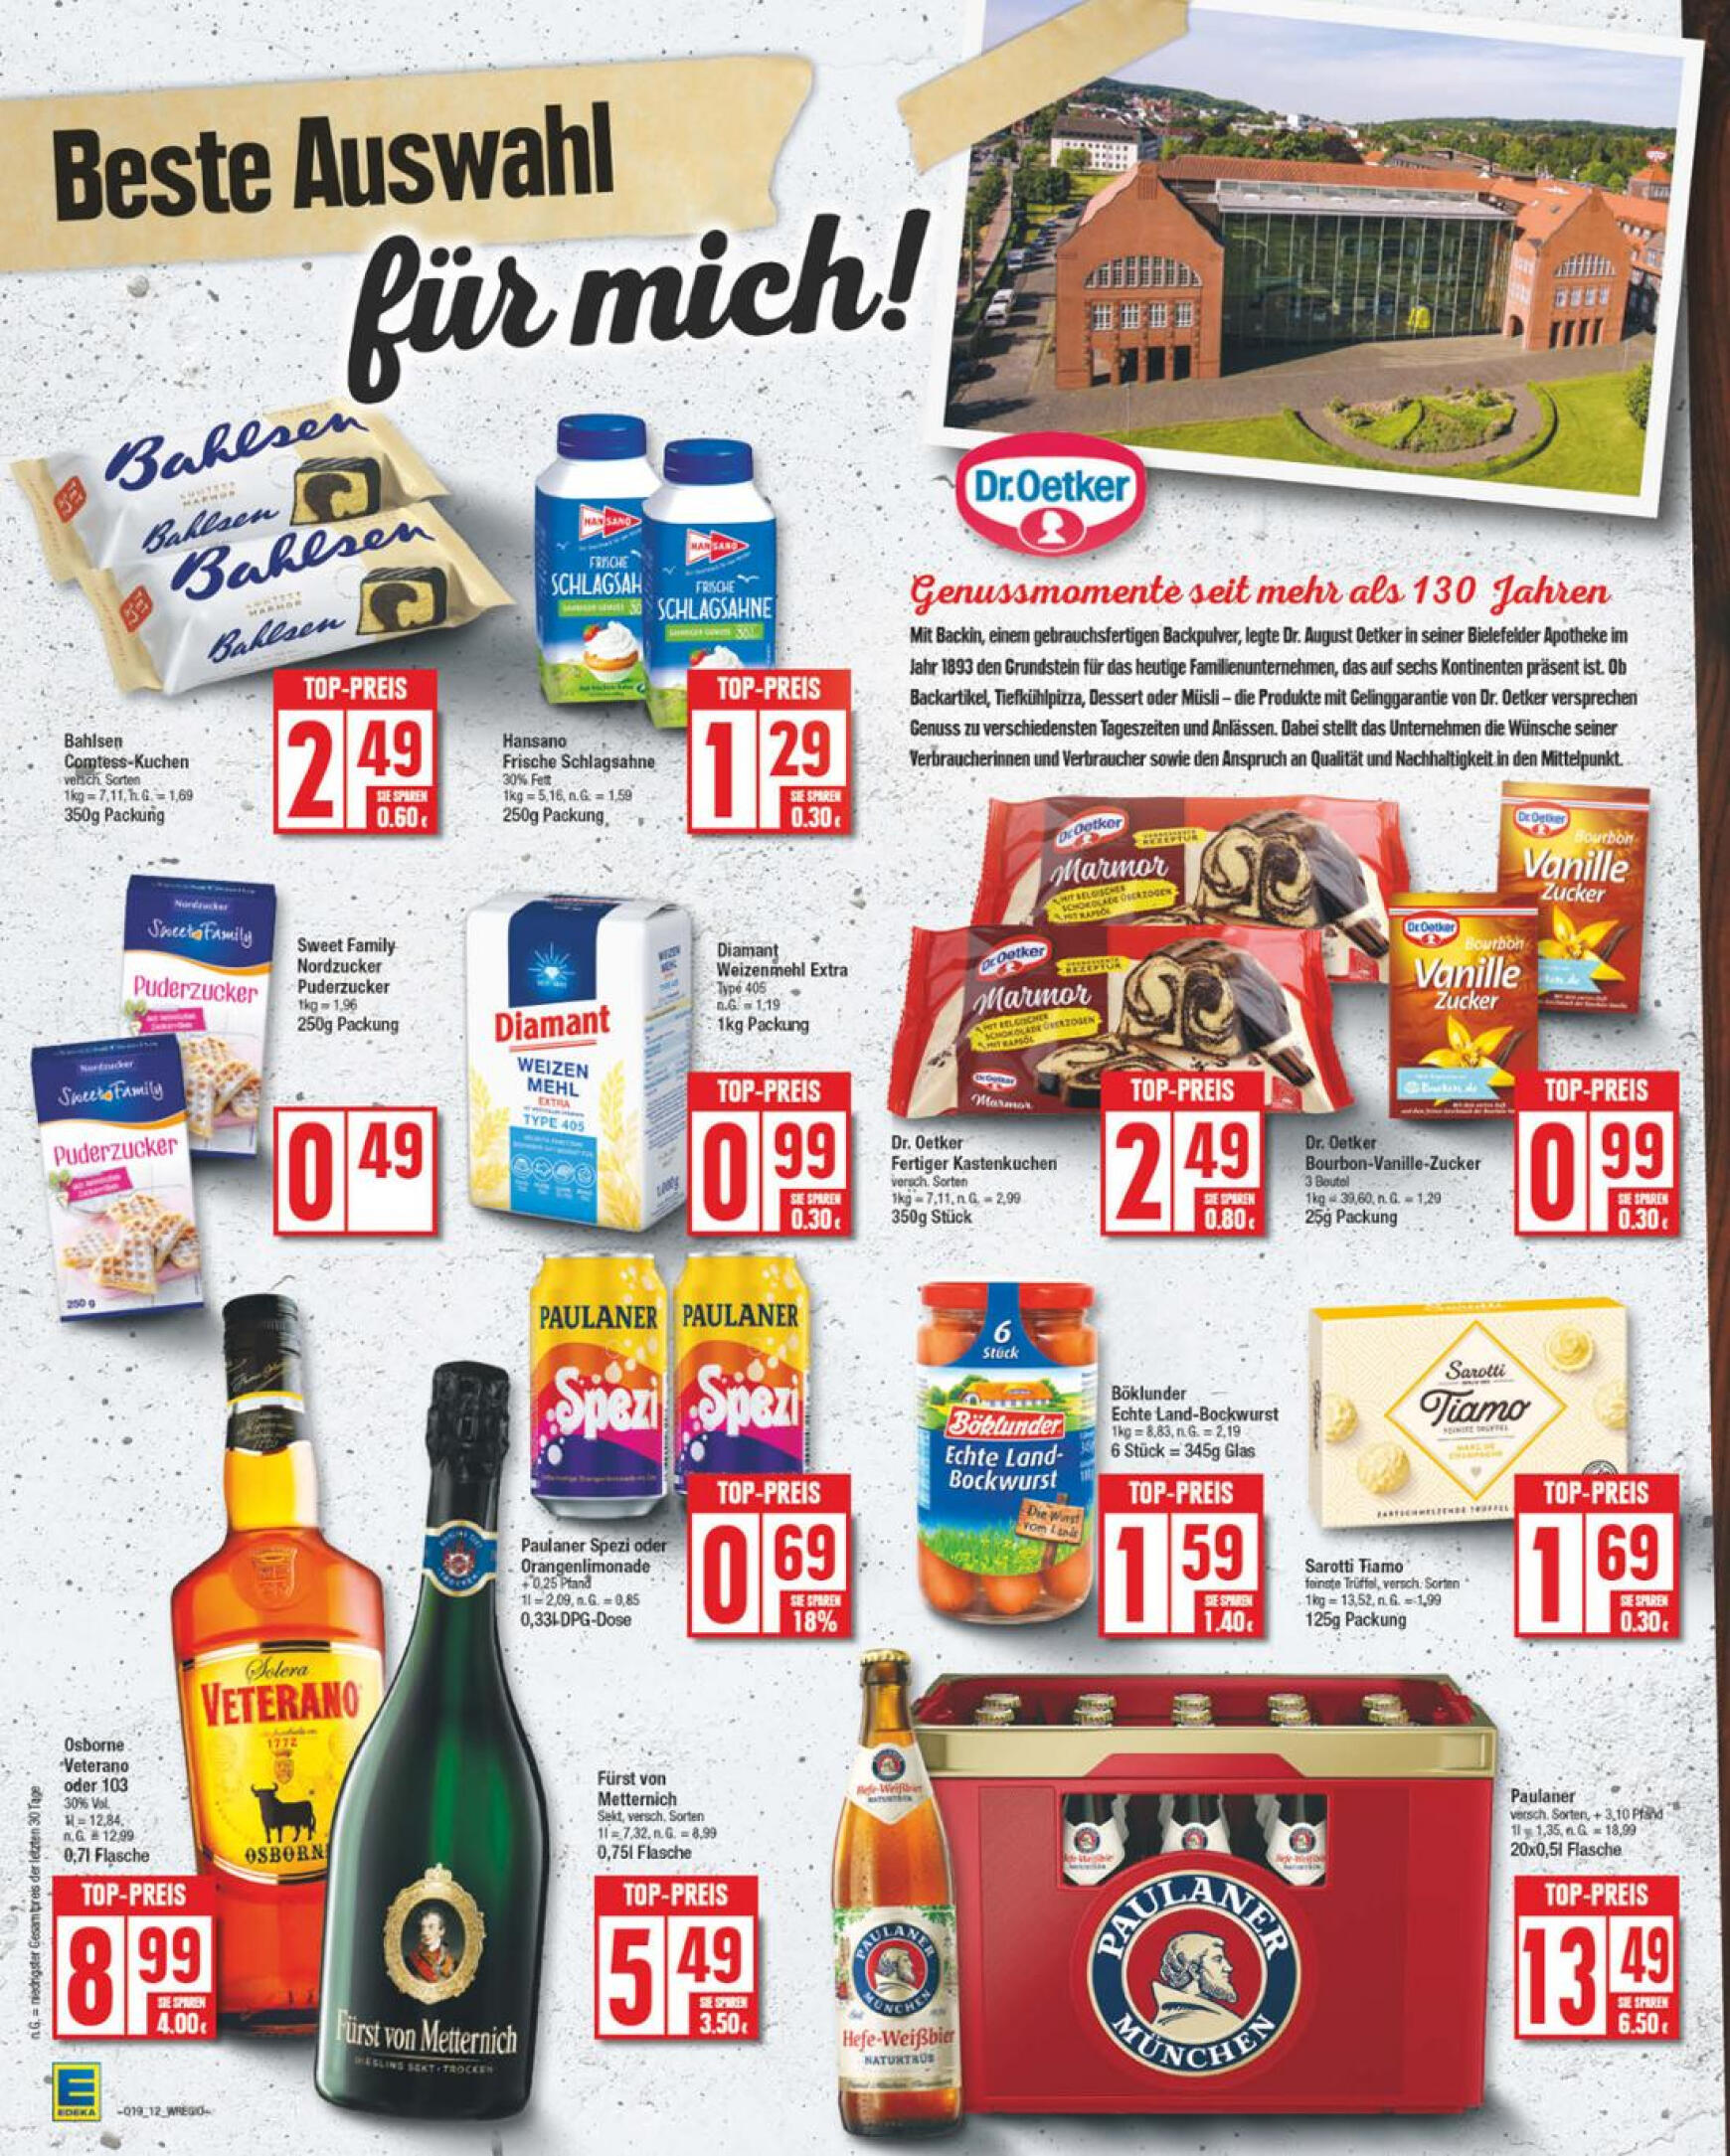 np - Flyer Edeka aktuell 06.05. - 11.05. - page: 14